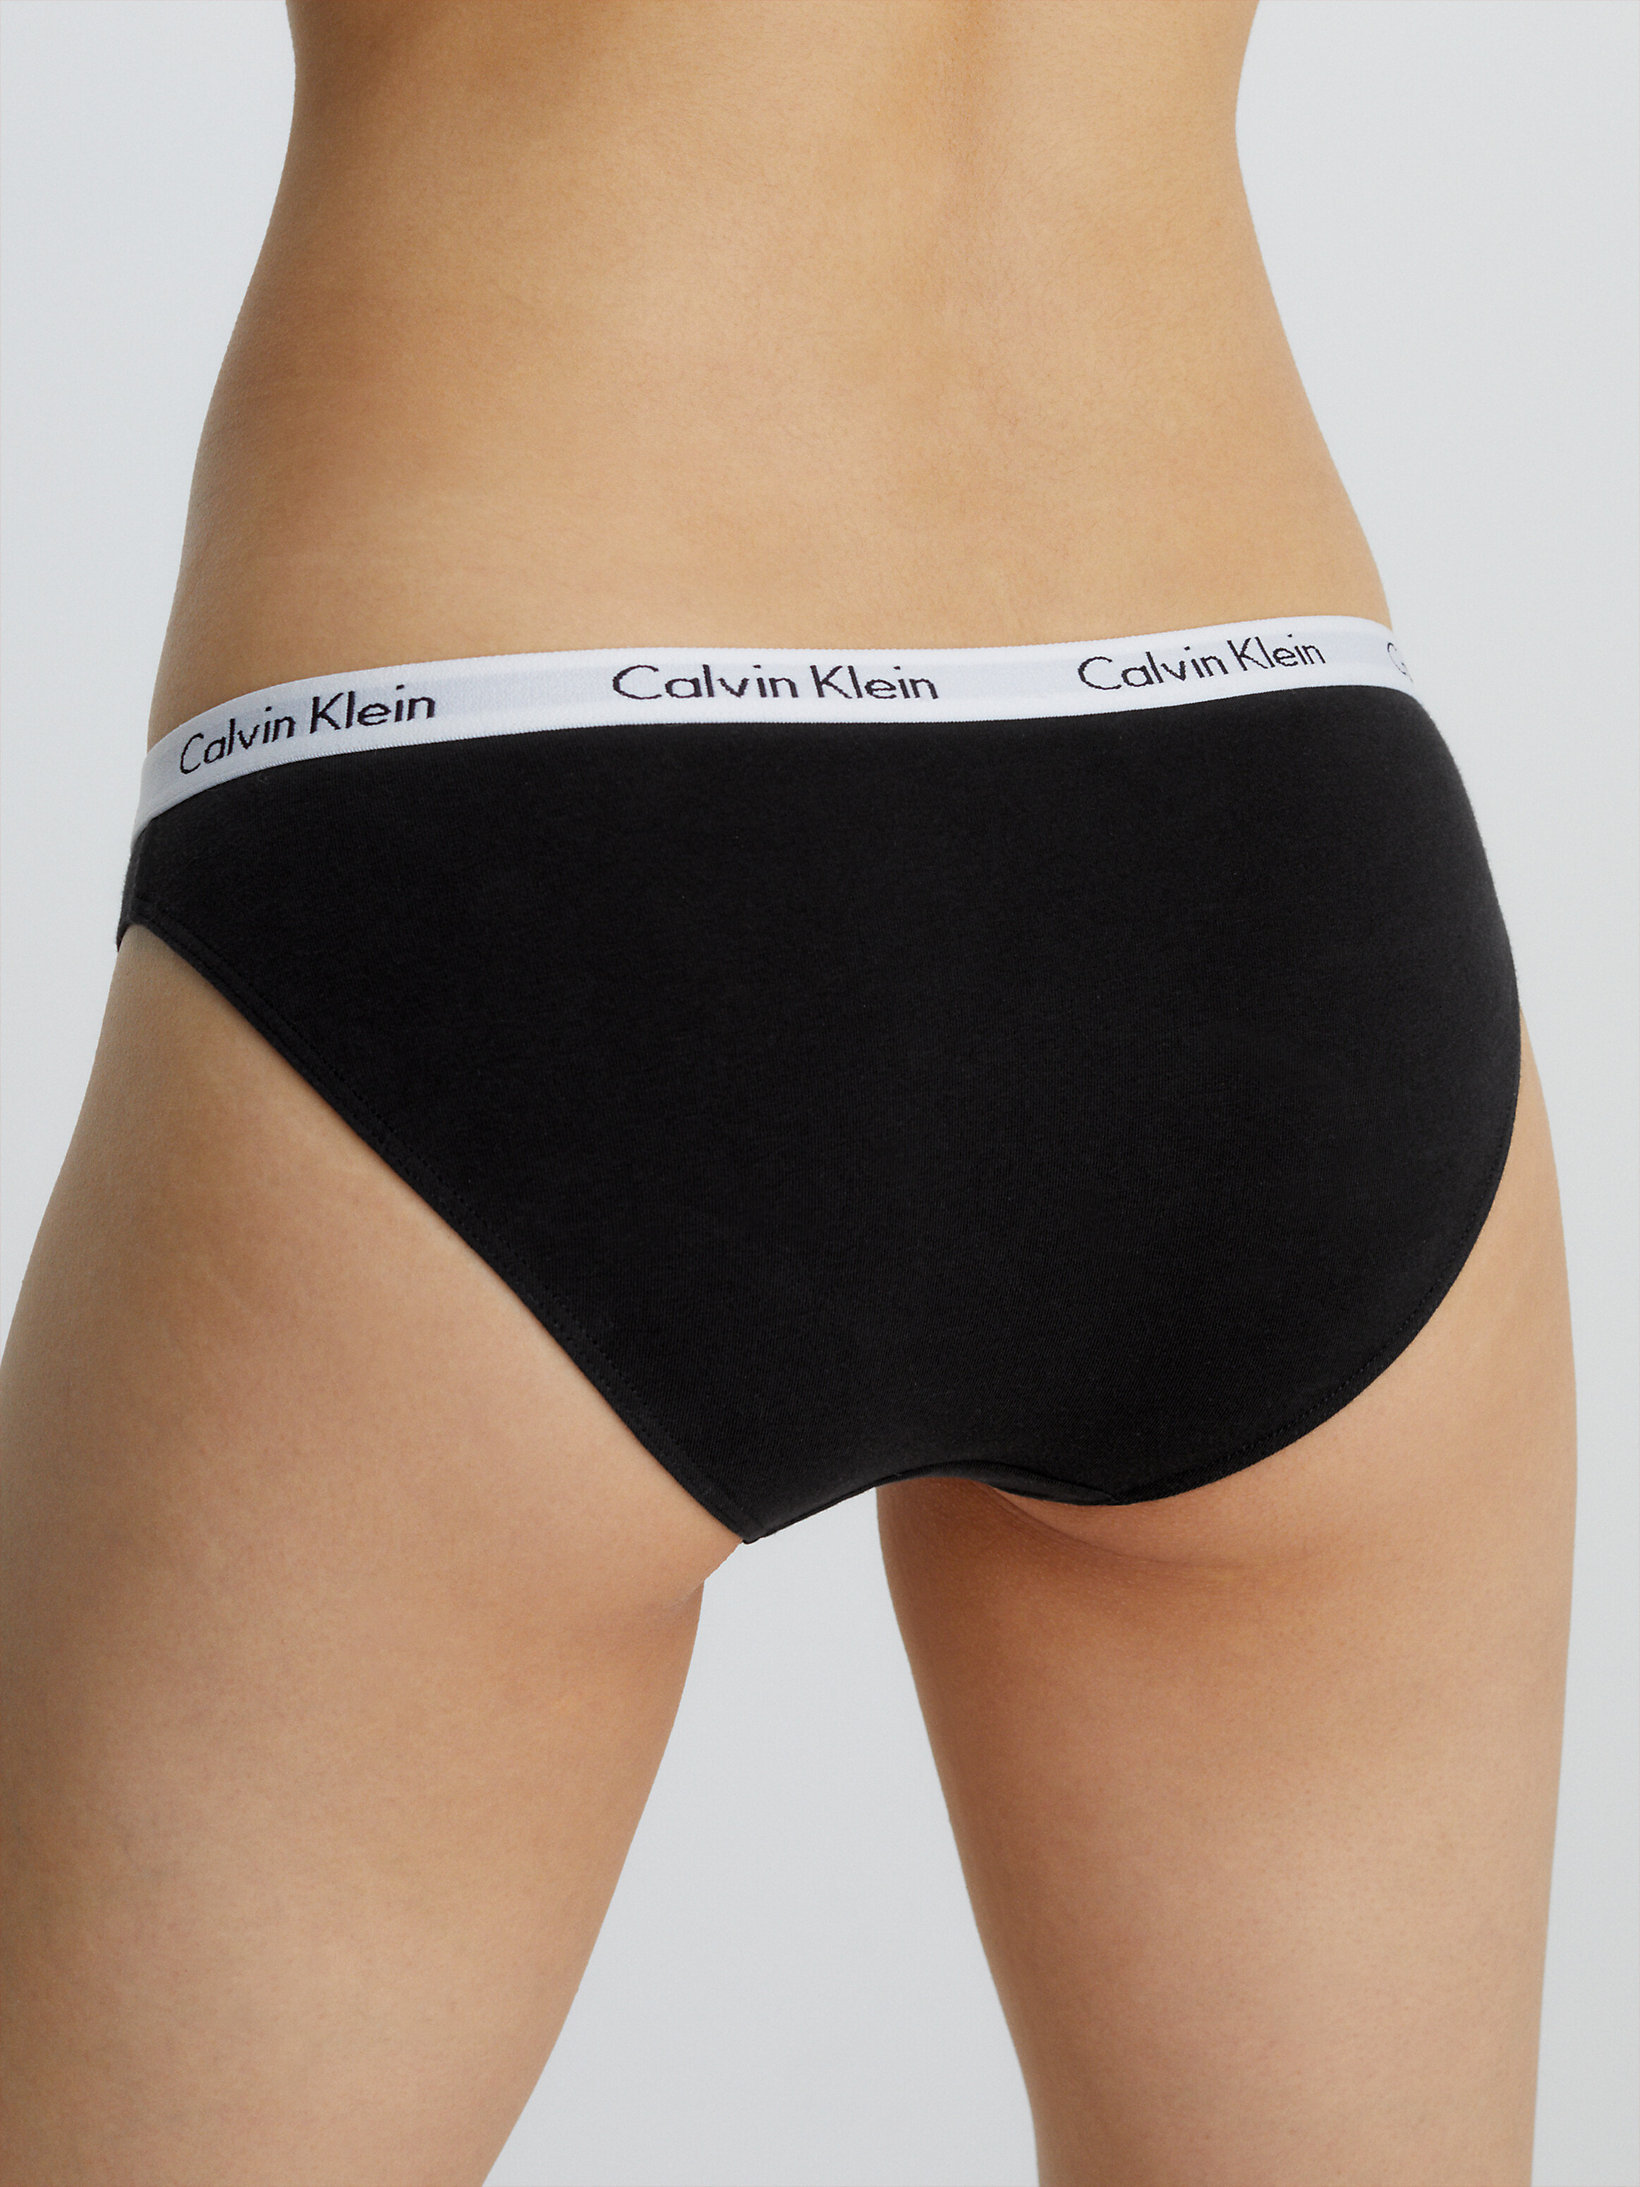 Black > Figi - Carousel > undefined Kobiety - Calvin Klein